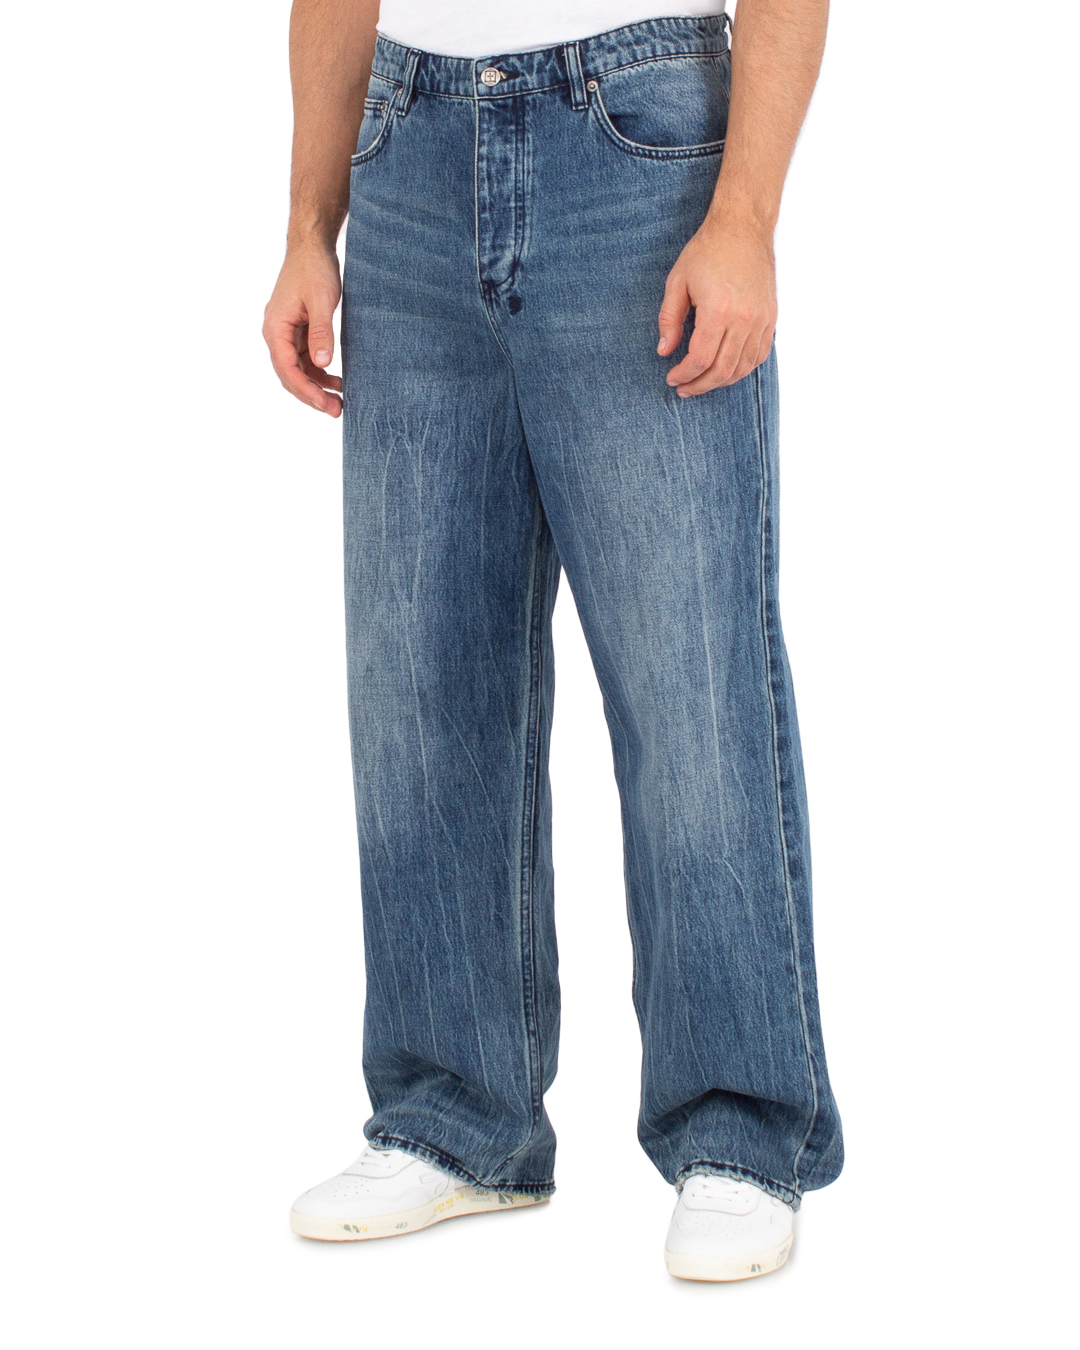 джинсы KSUBI MPS24DJ020 синий 33, размер 33 - фото 3